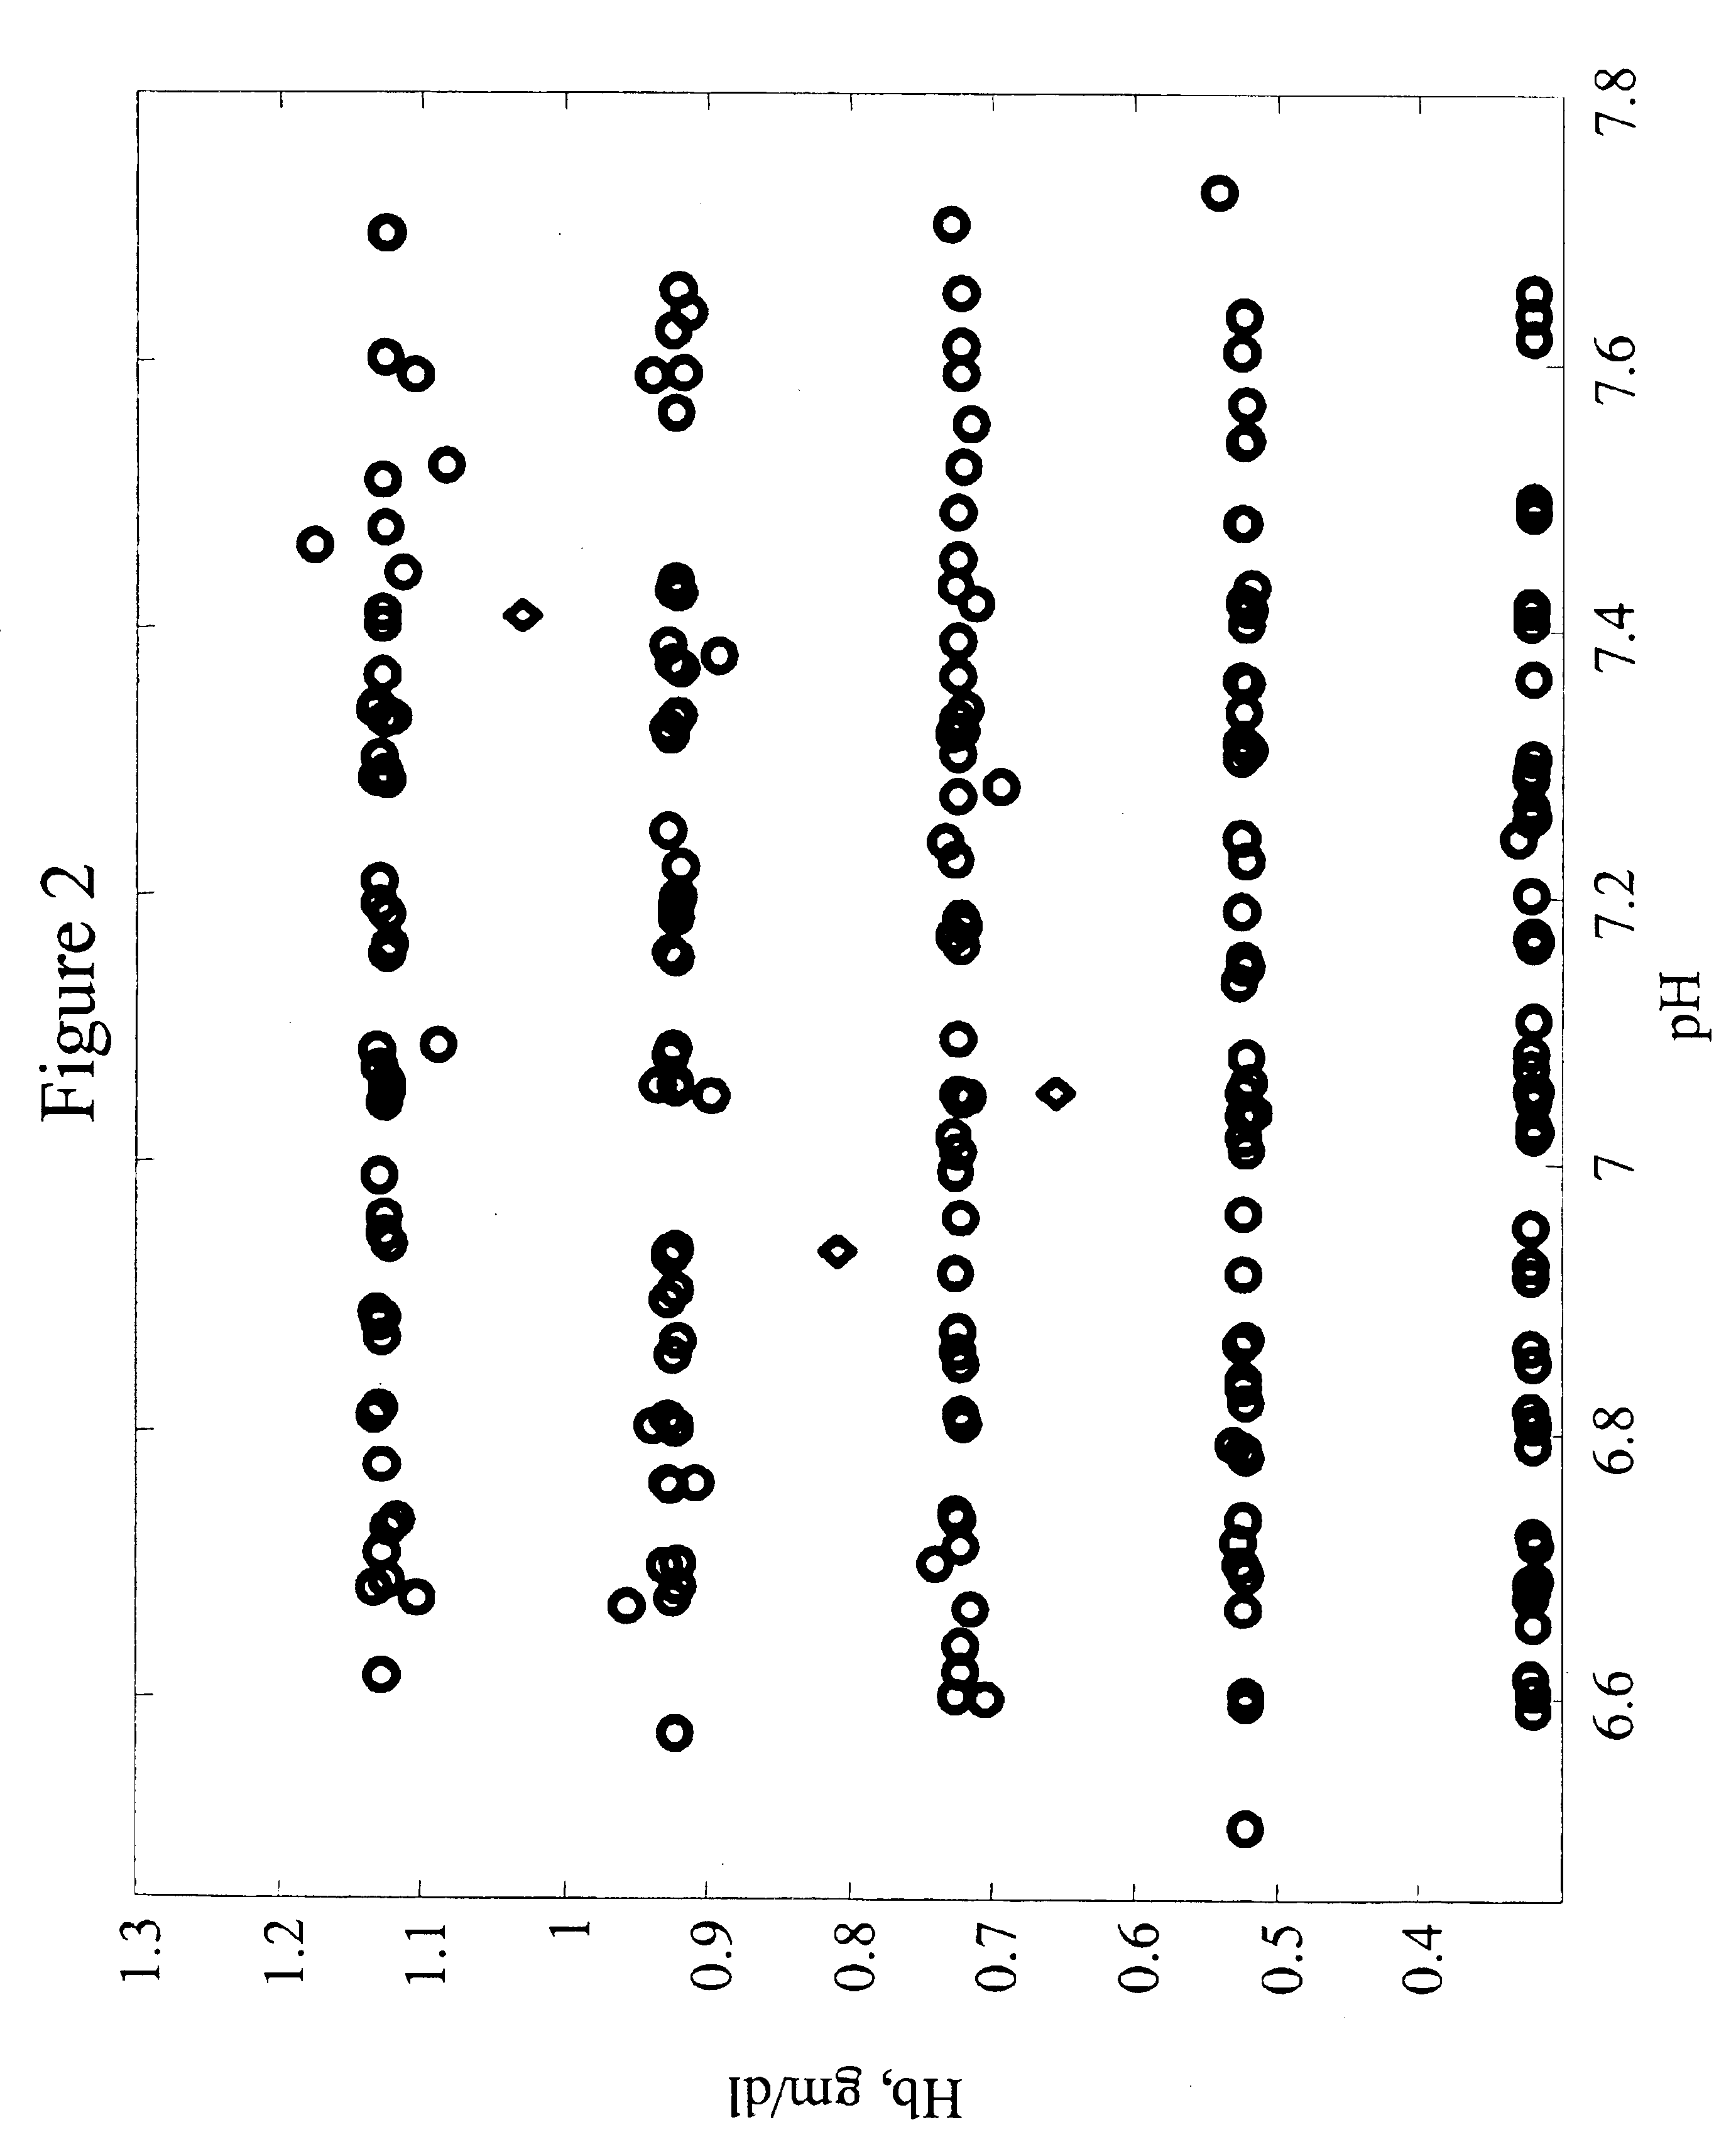 Determination of pH including hemoglobin correction